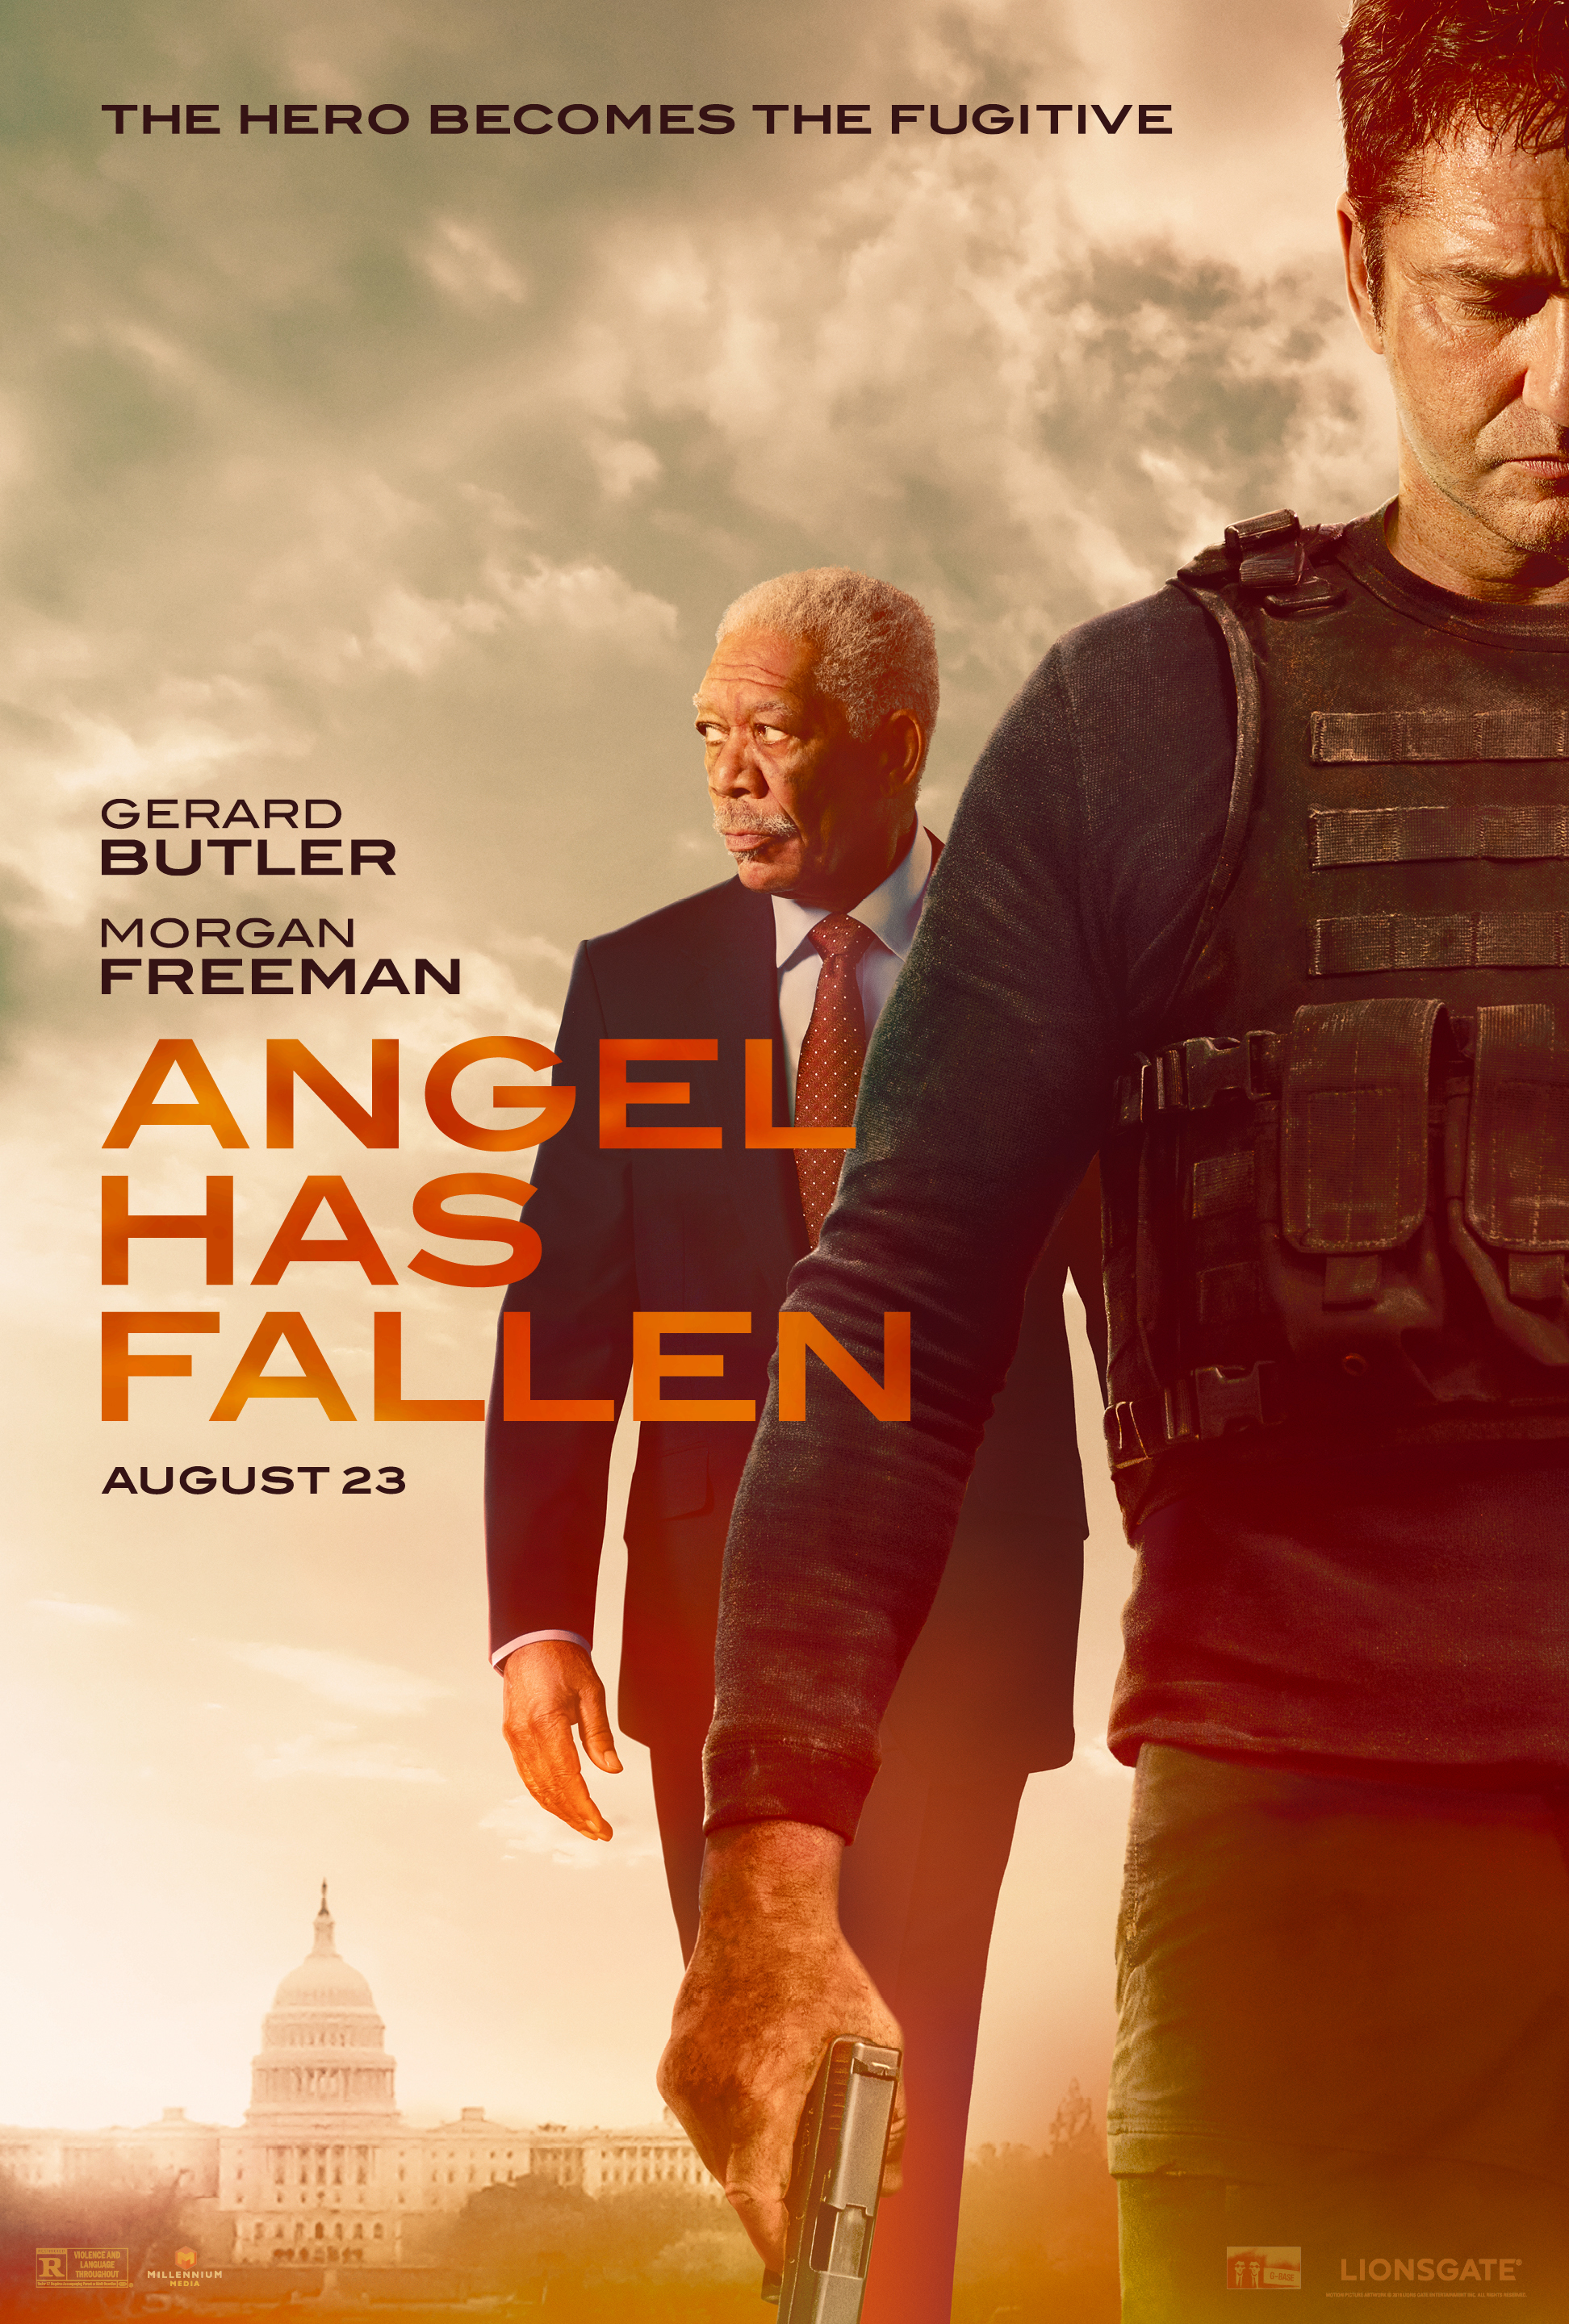 Stiahni si Filmy s titulkama Pad andela / Angel Has Fallen (2019)[WebRip] = CSFD 63%